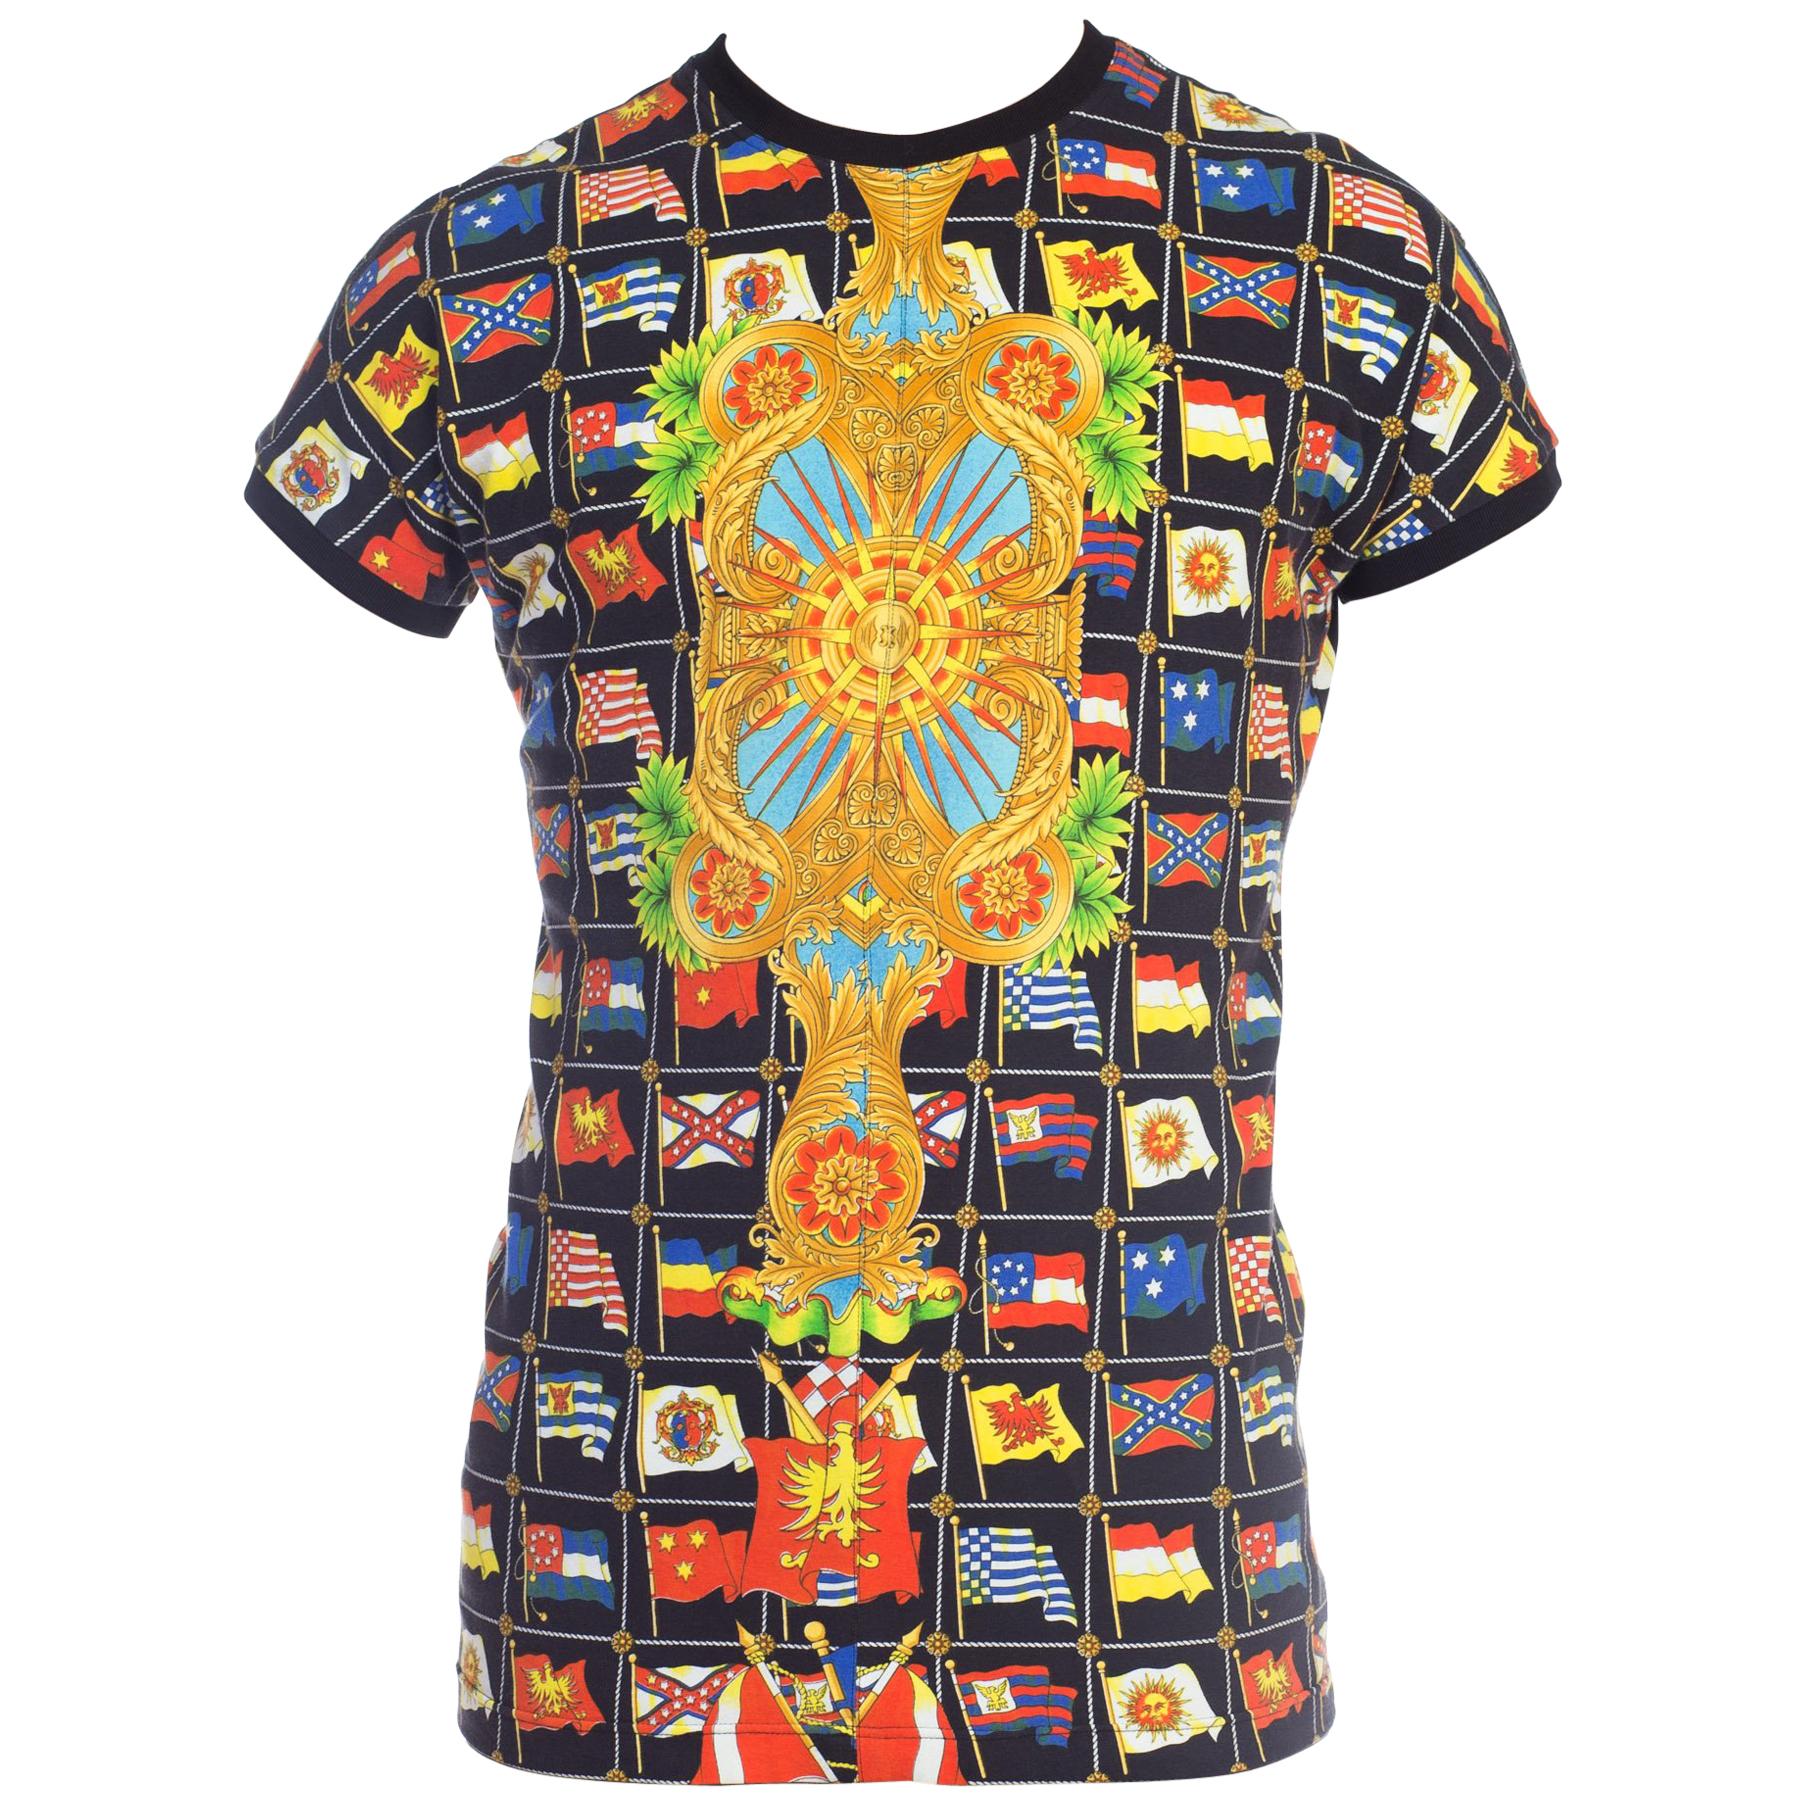 1990S GIANNI VERSACE Black Printed Cotton Spandex Miami Beach Collection T-Shirt